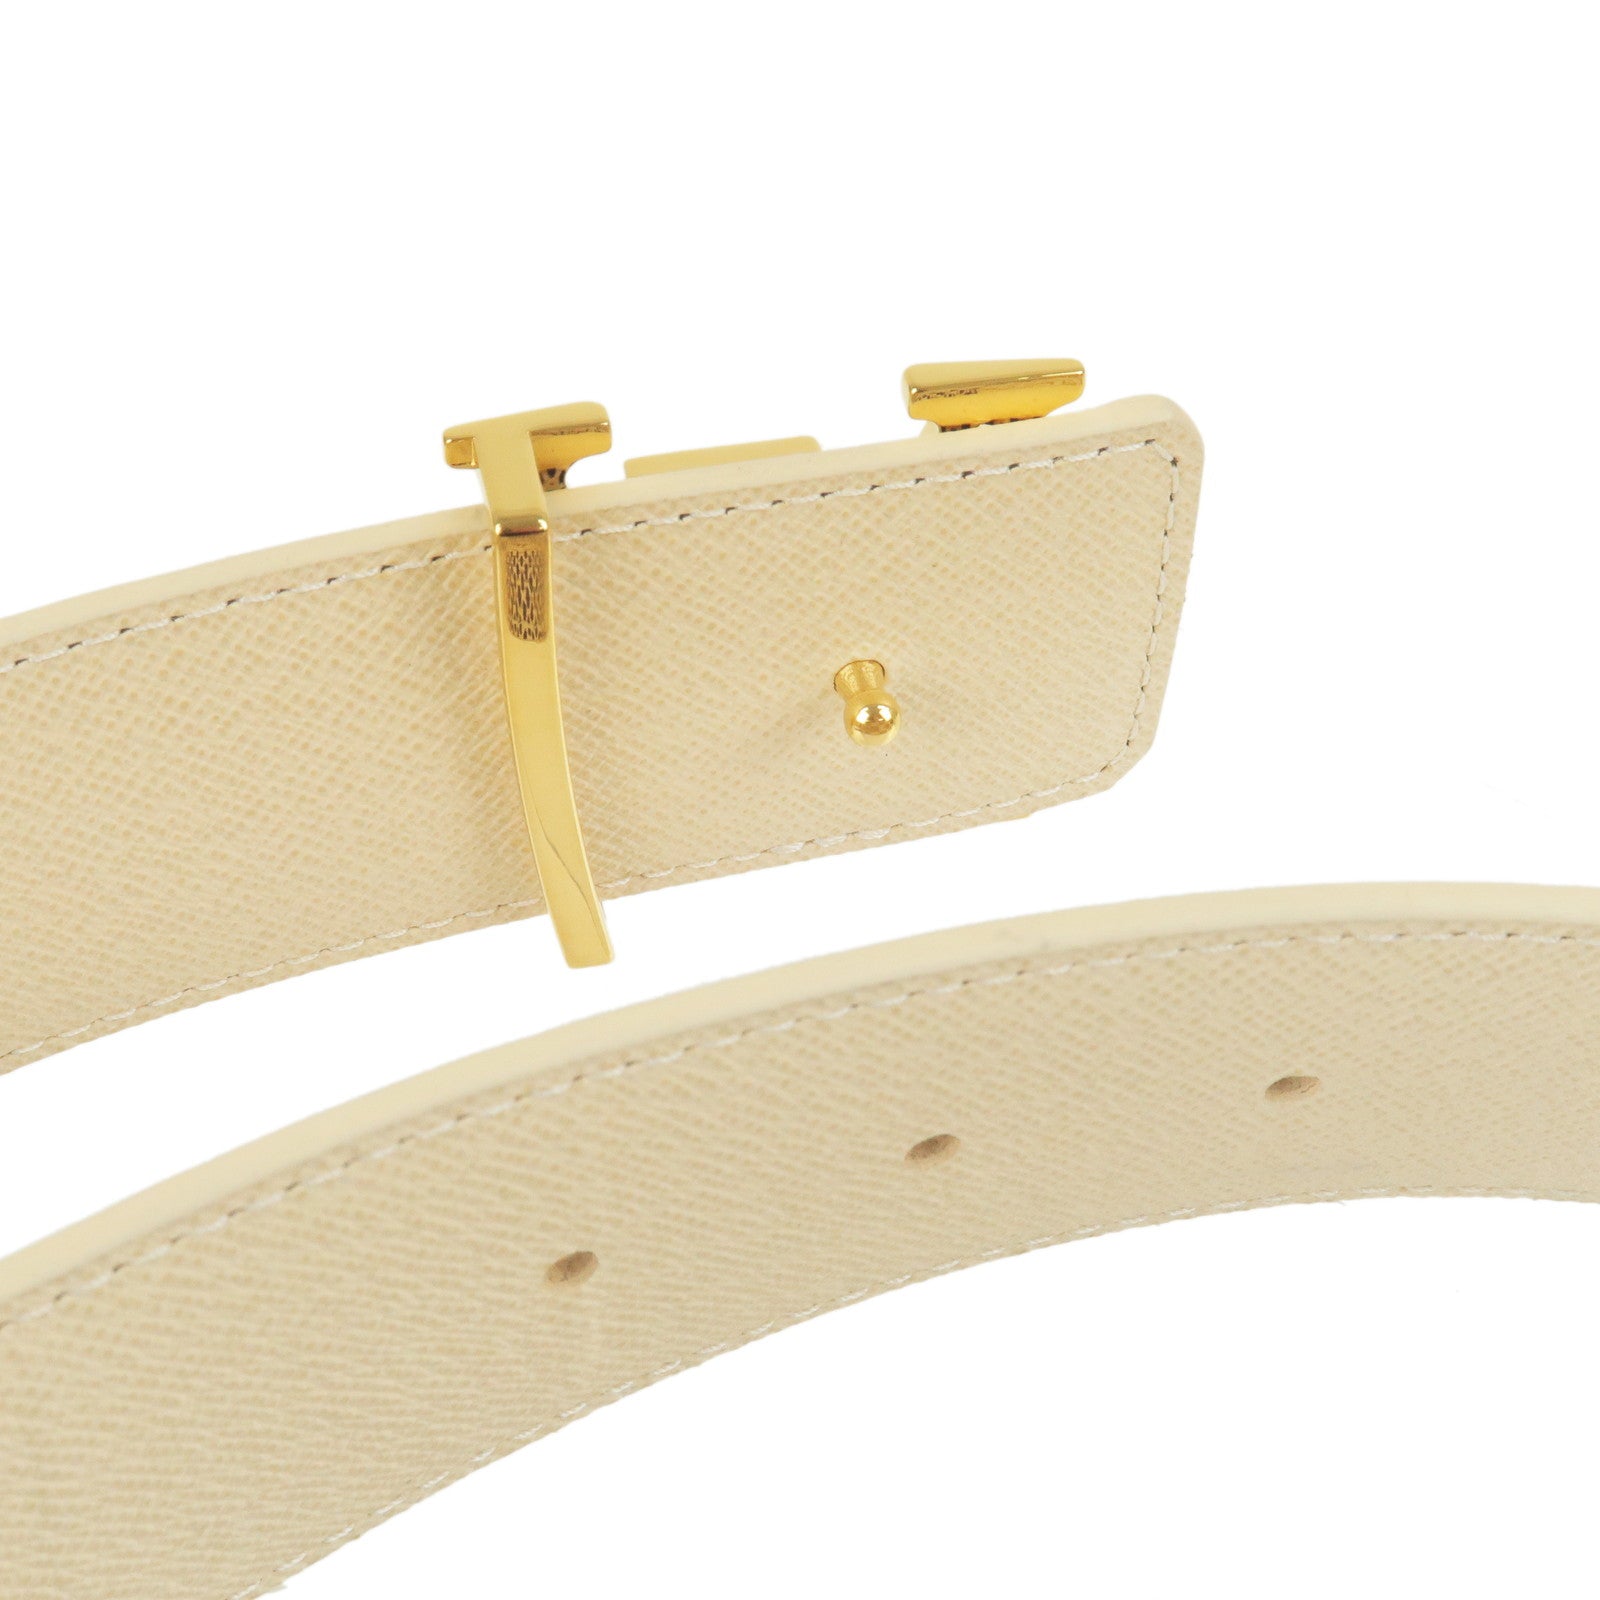 Louis Vuitton Lv checkered cream and gold belt